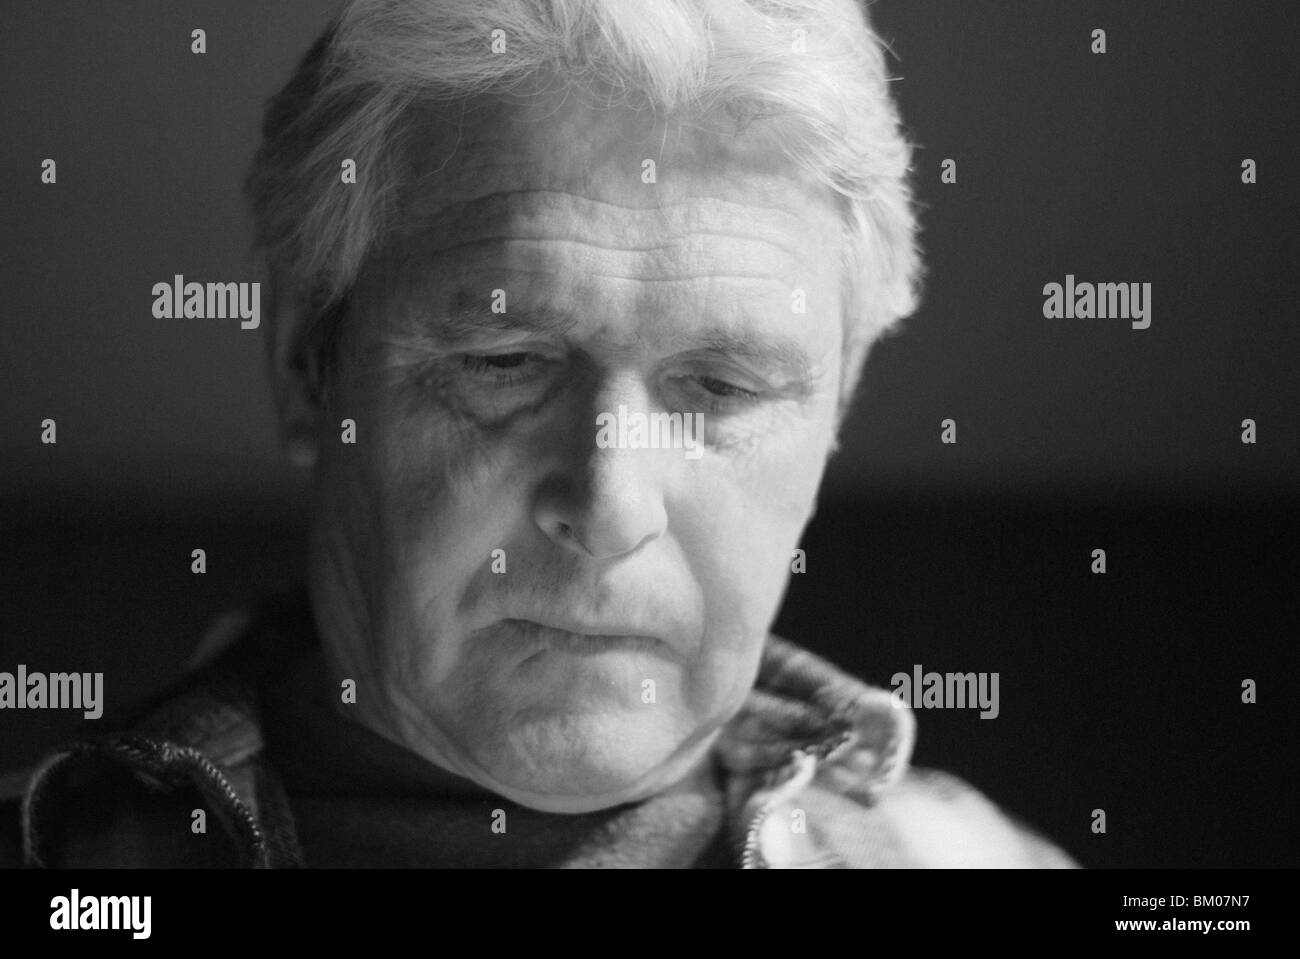 a pensive senior man concentrates while working, a portrait in black and white, suburban albuquerque, new mexico, usa Stock Photo